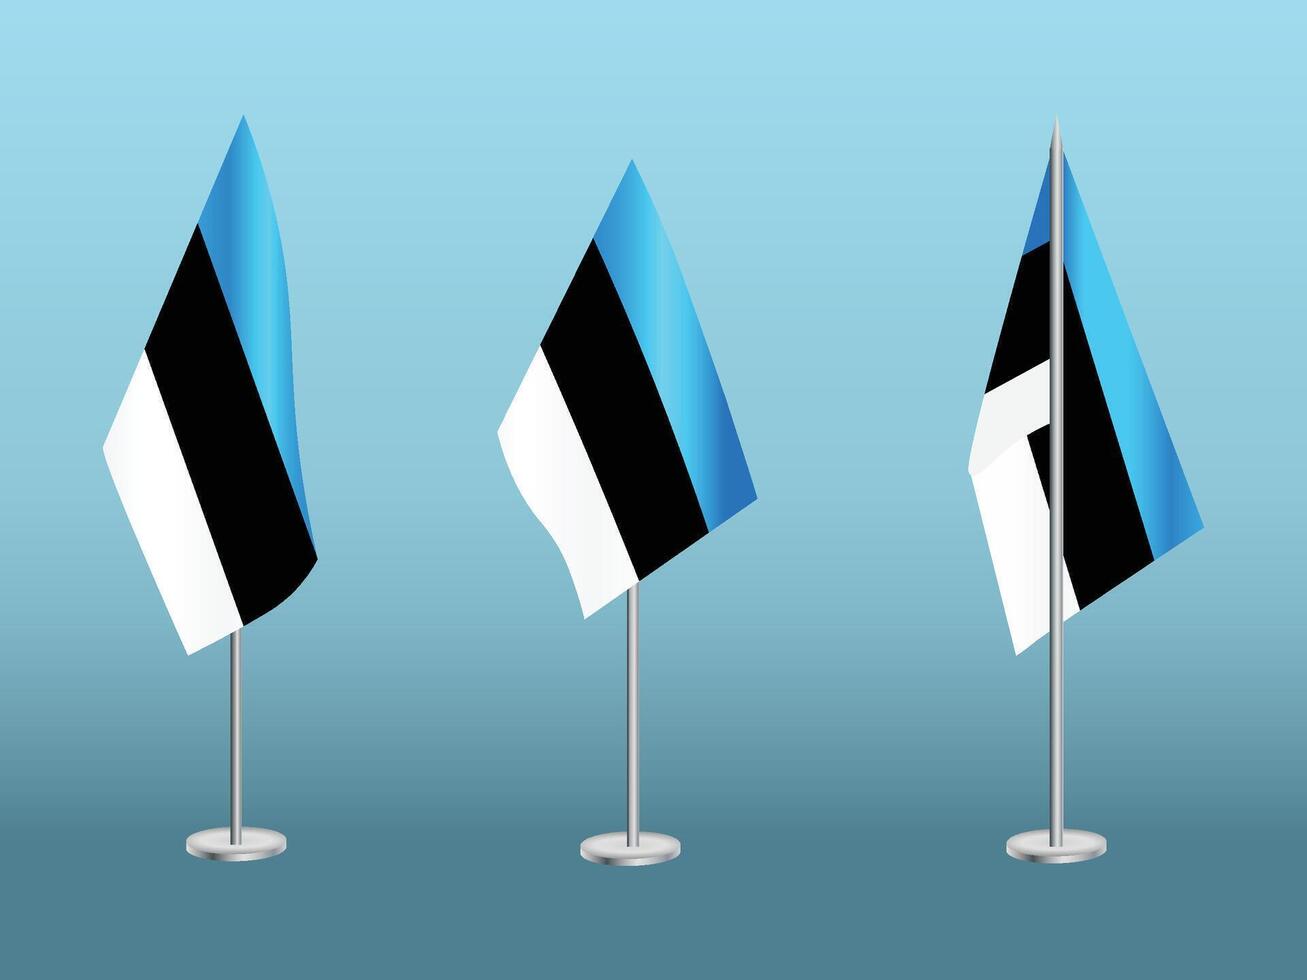 Flag of Estonia with silver pole.Set of Estonia's national flag vector